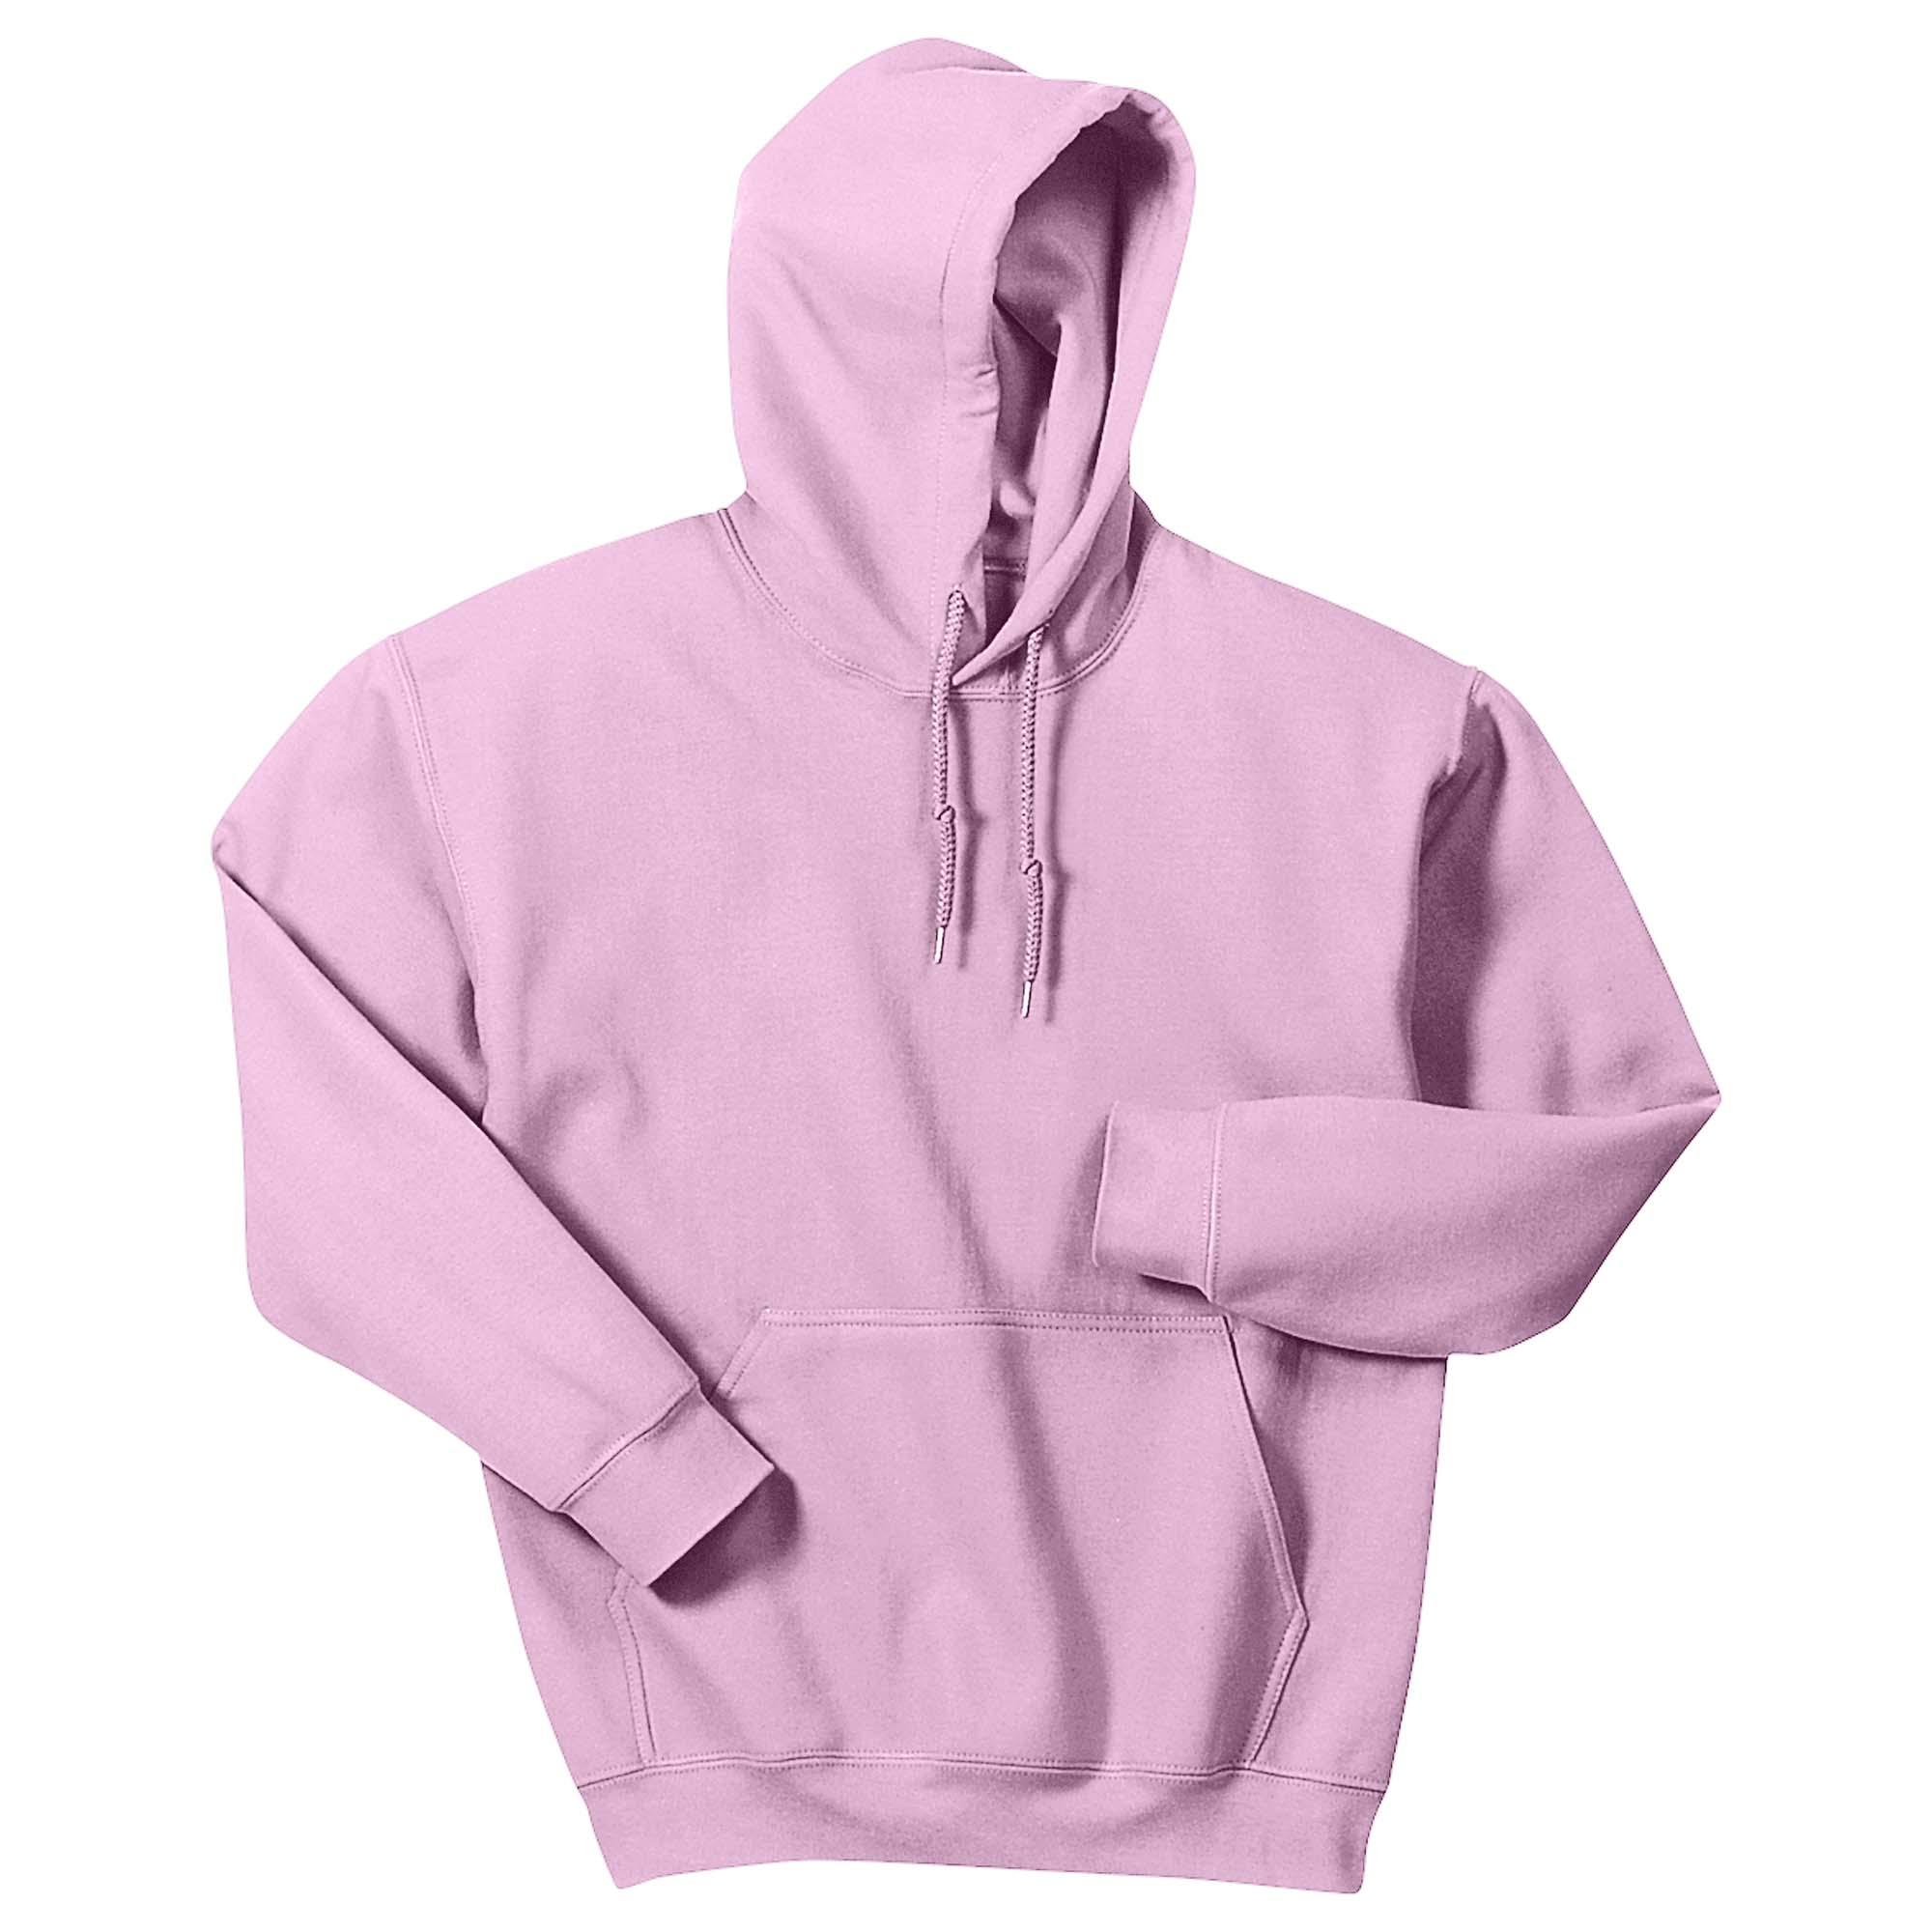 Gildan 18500 Heavy Blend Hooded Sweatshirt - Light Pink